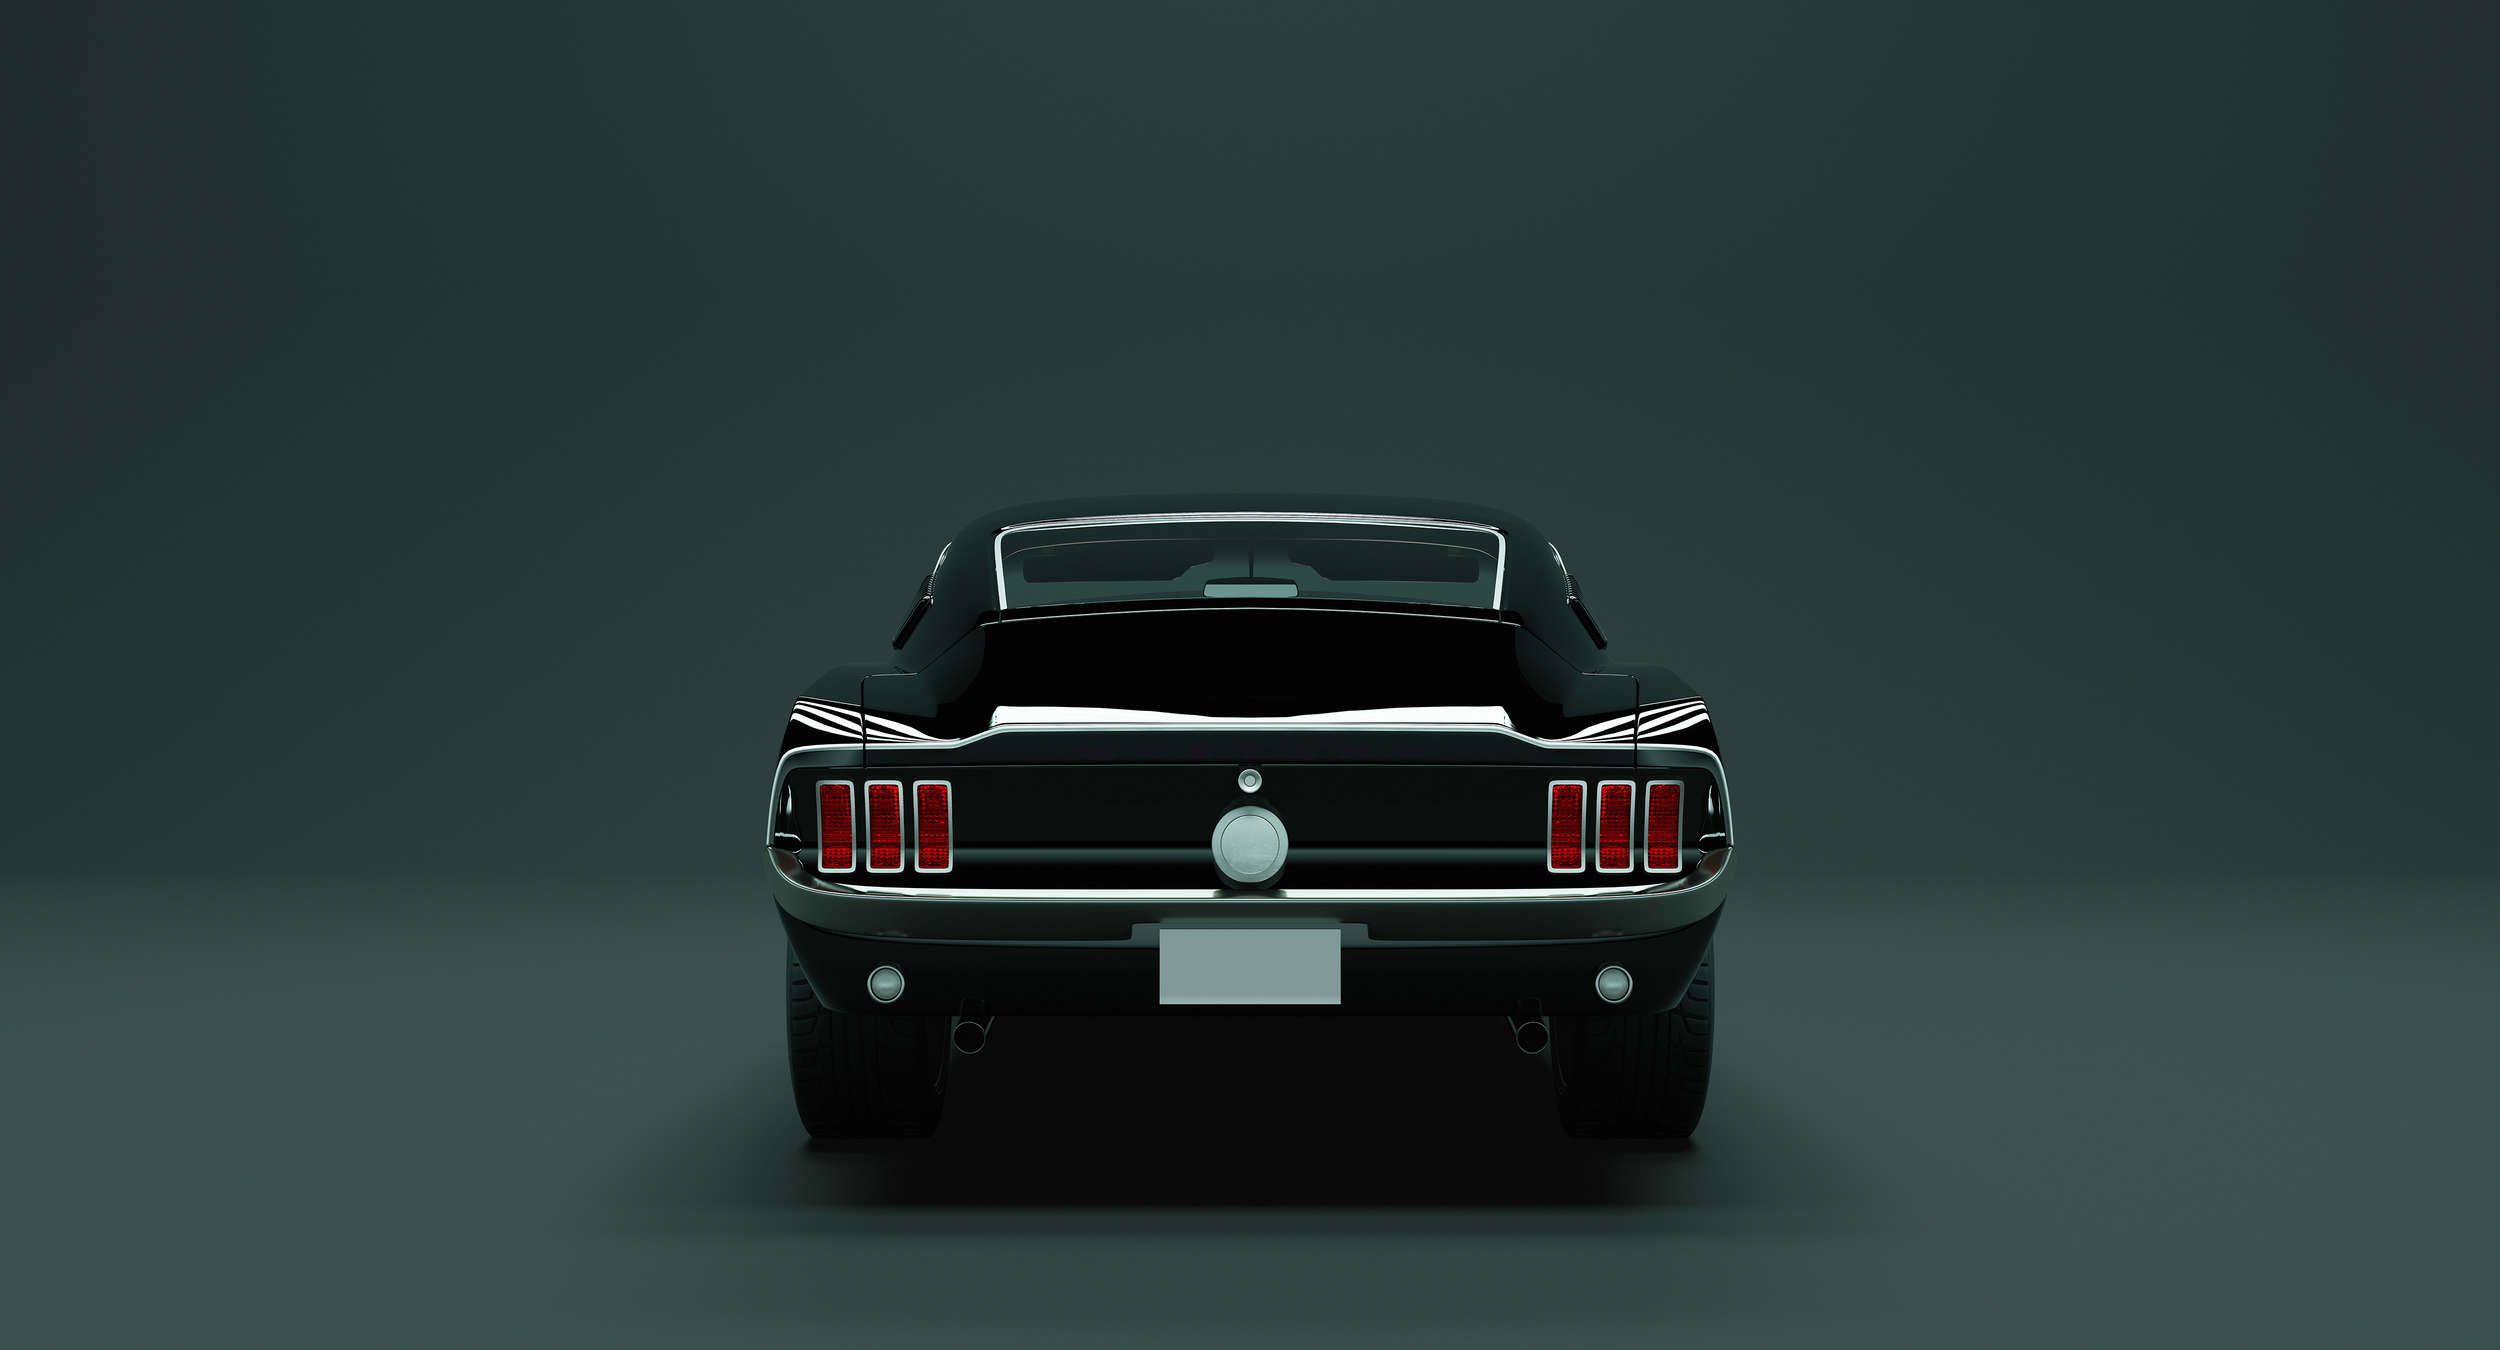             Mustang 3 - Papel pintado de American Muscle Car - Azul, Negro | Liso Perlado
        